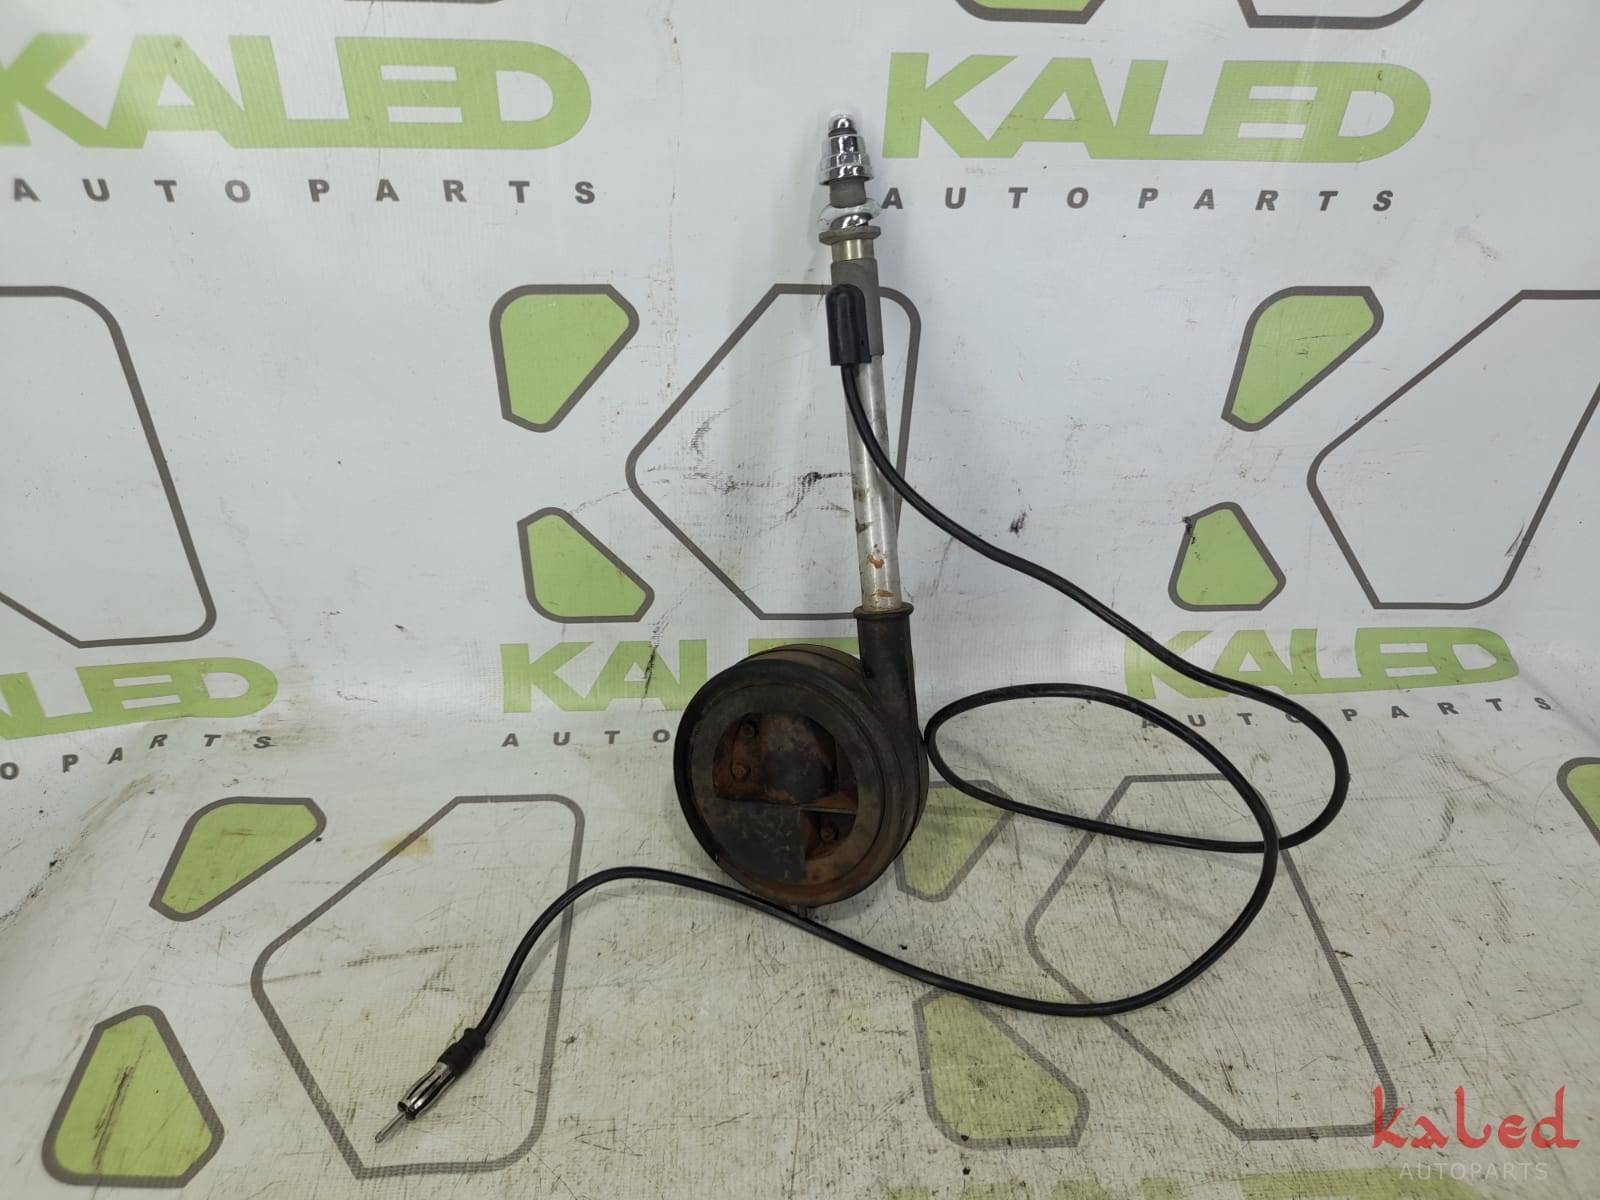 Antena Elétrica Kadett Opala Antigo P/ Recuperar - Kaled Auto Parts